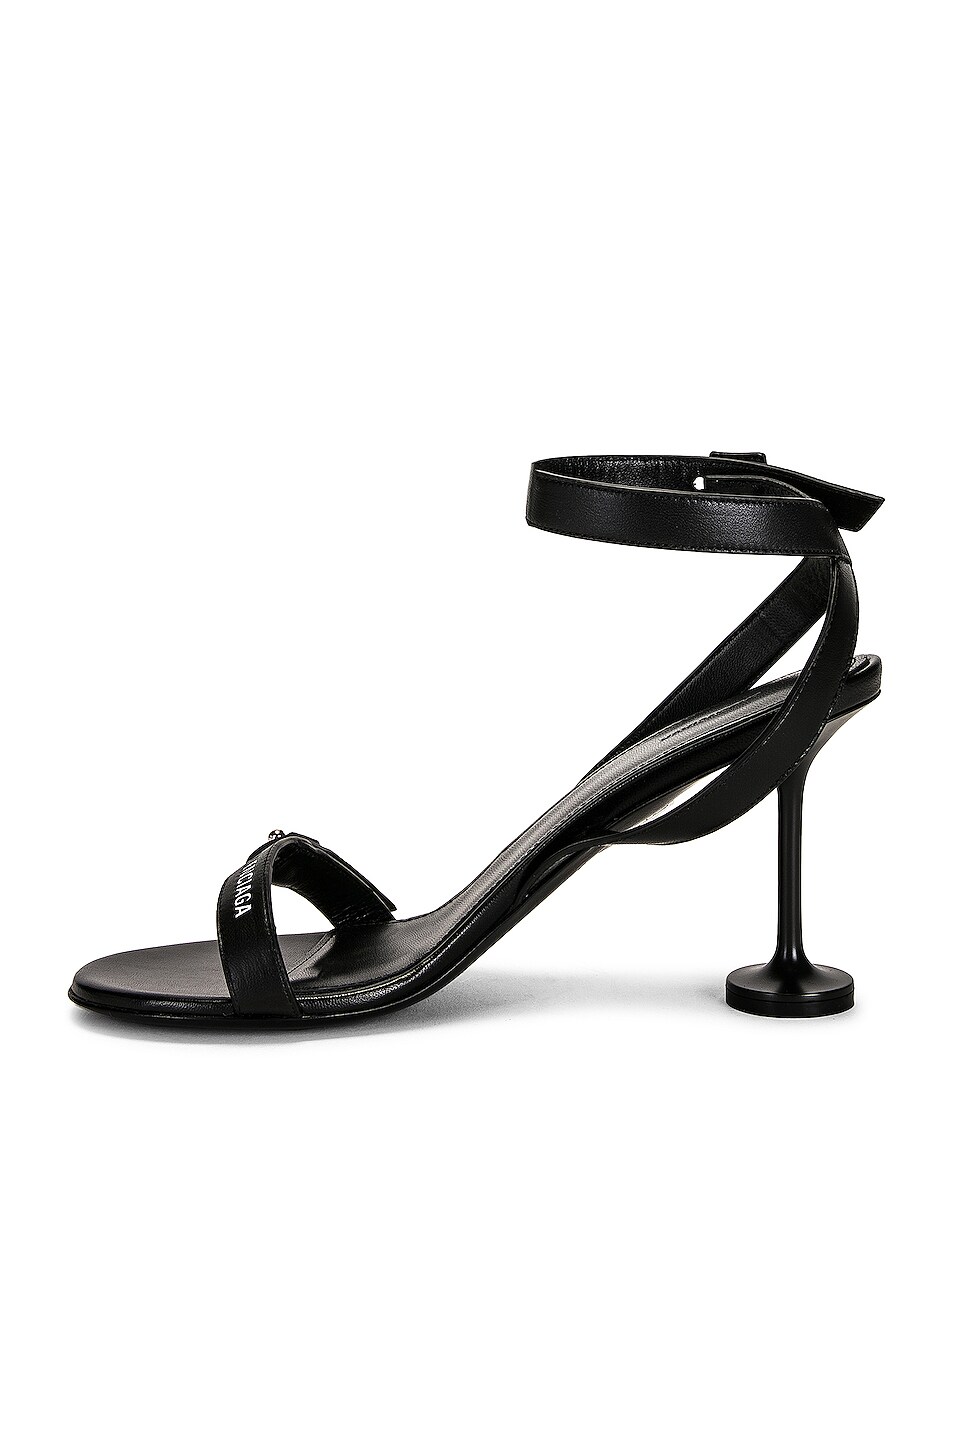 Balenciaga Afterhour Sandals in Black & White | FWRD